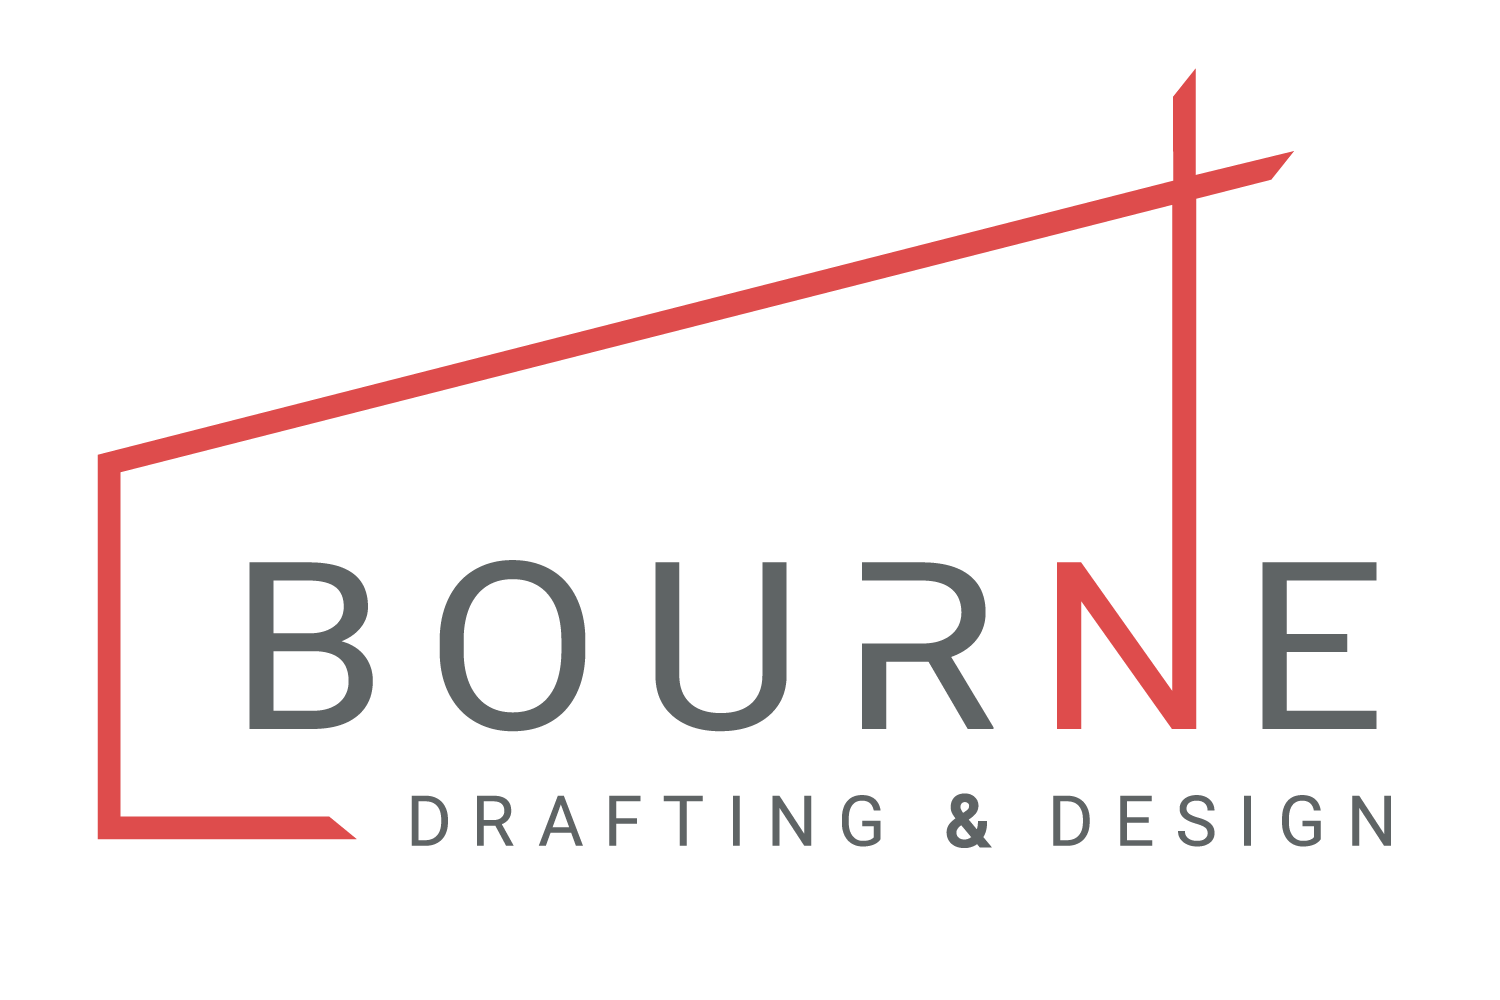 Bourne Drafting & Design Logo